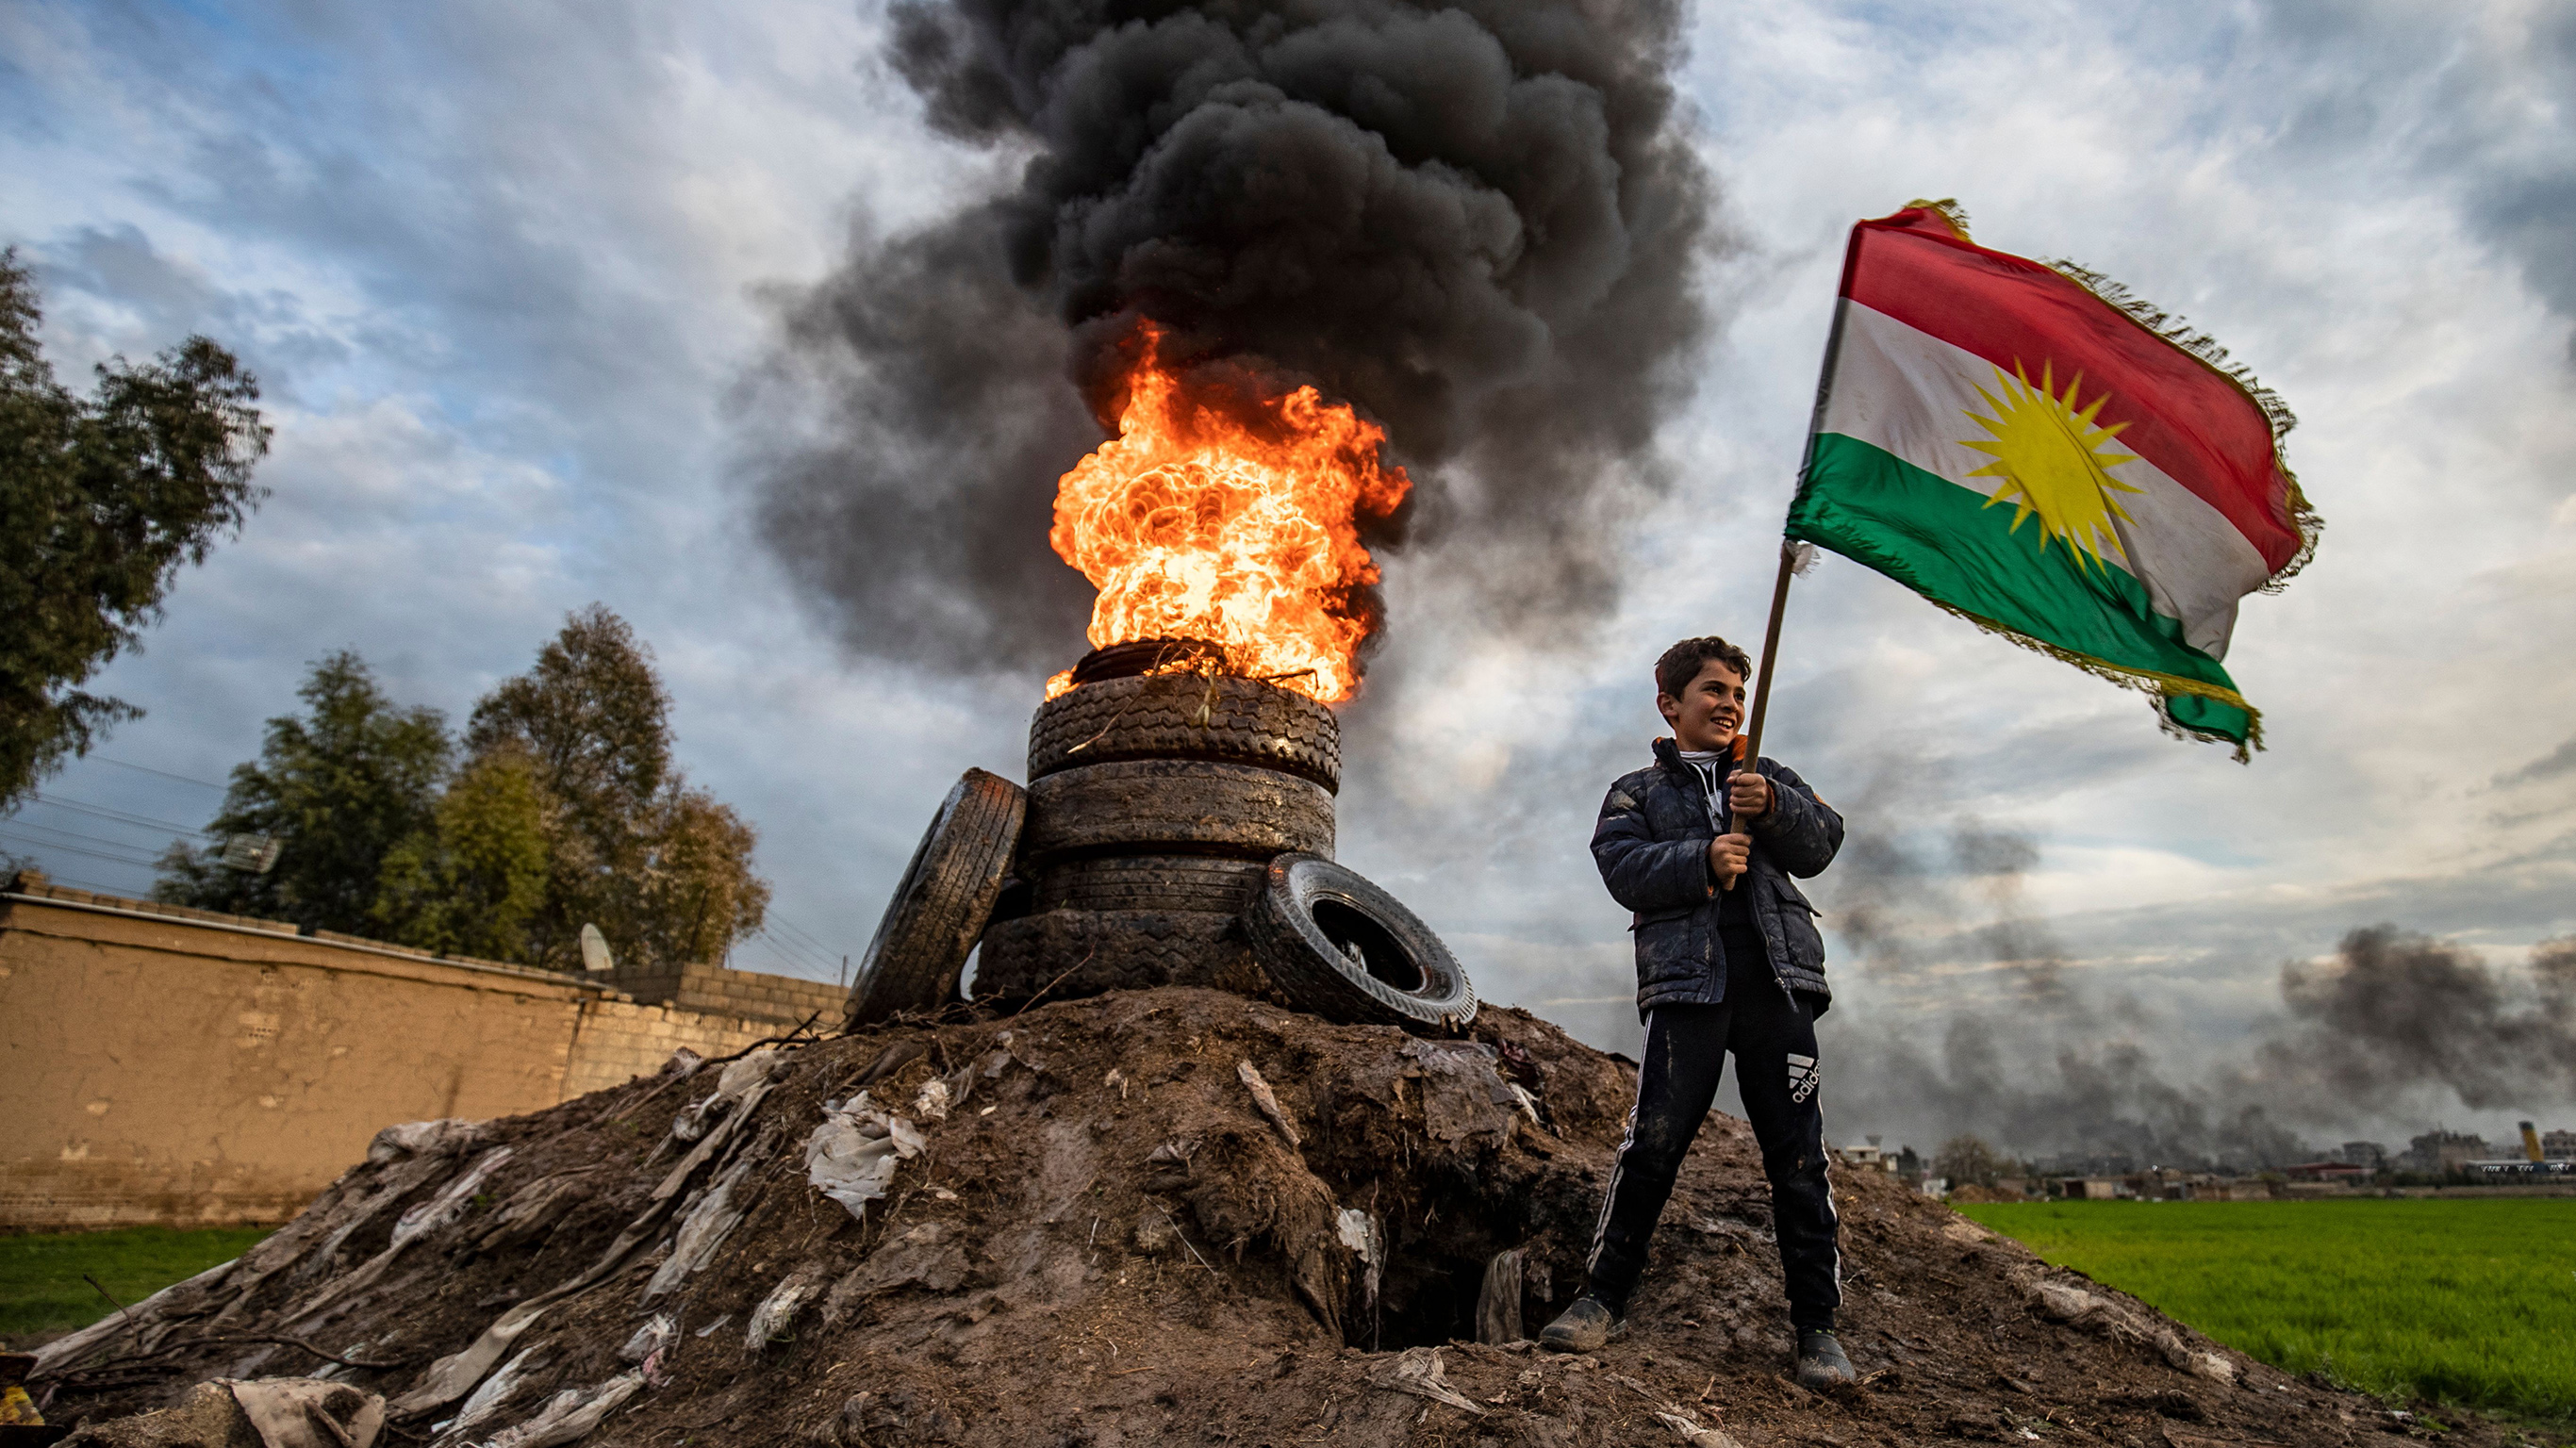 Syrian Kurds still fight for rights on unrecognizable battlefield / Shivan Ibrahim